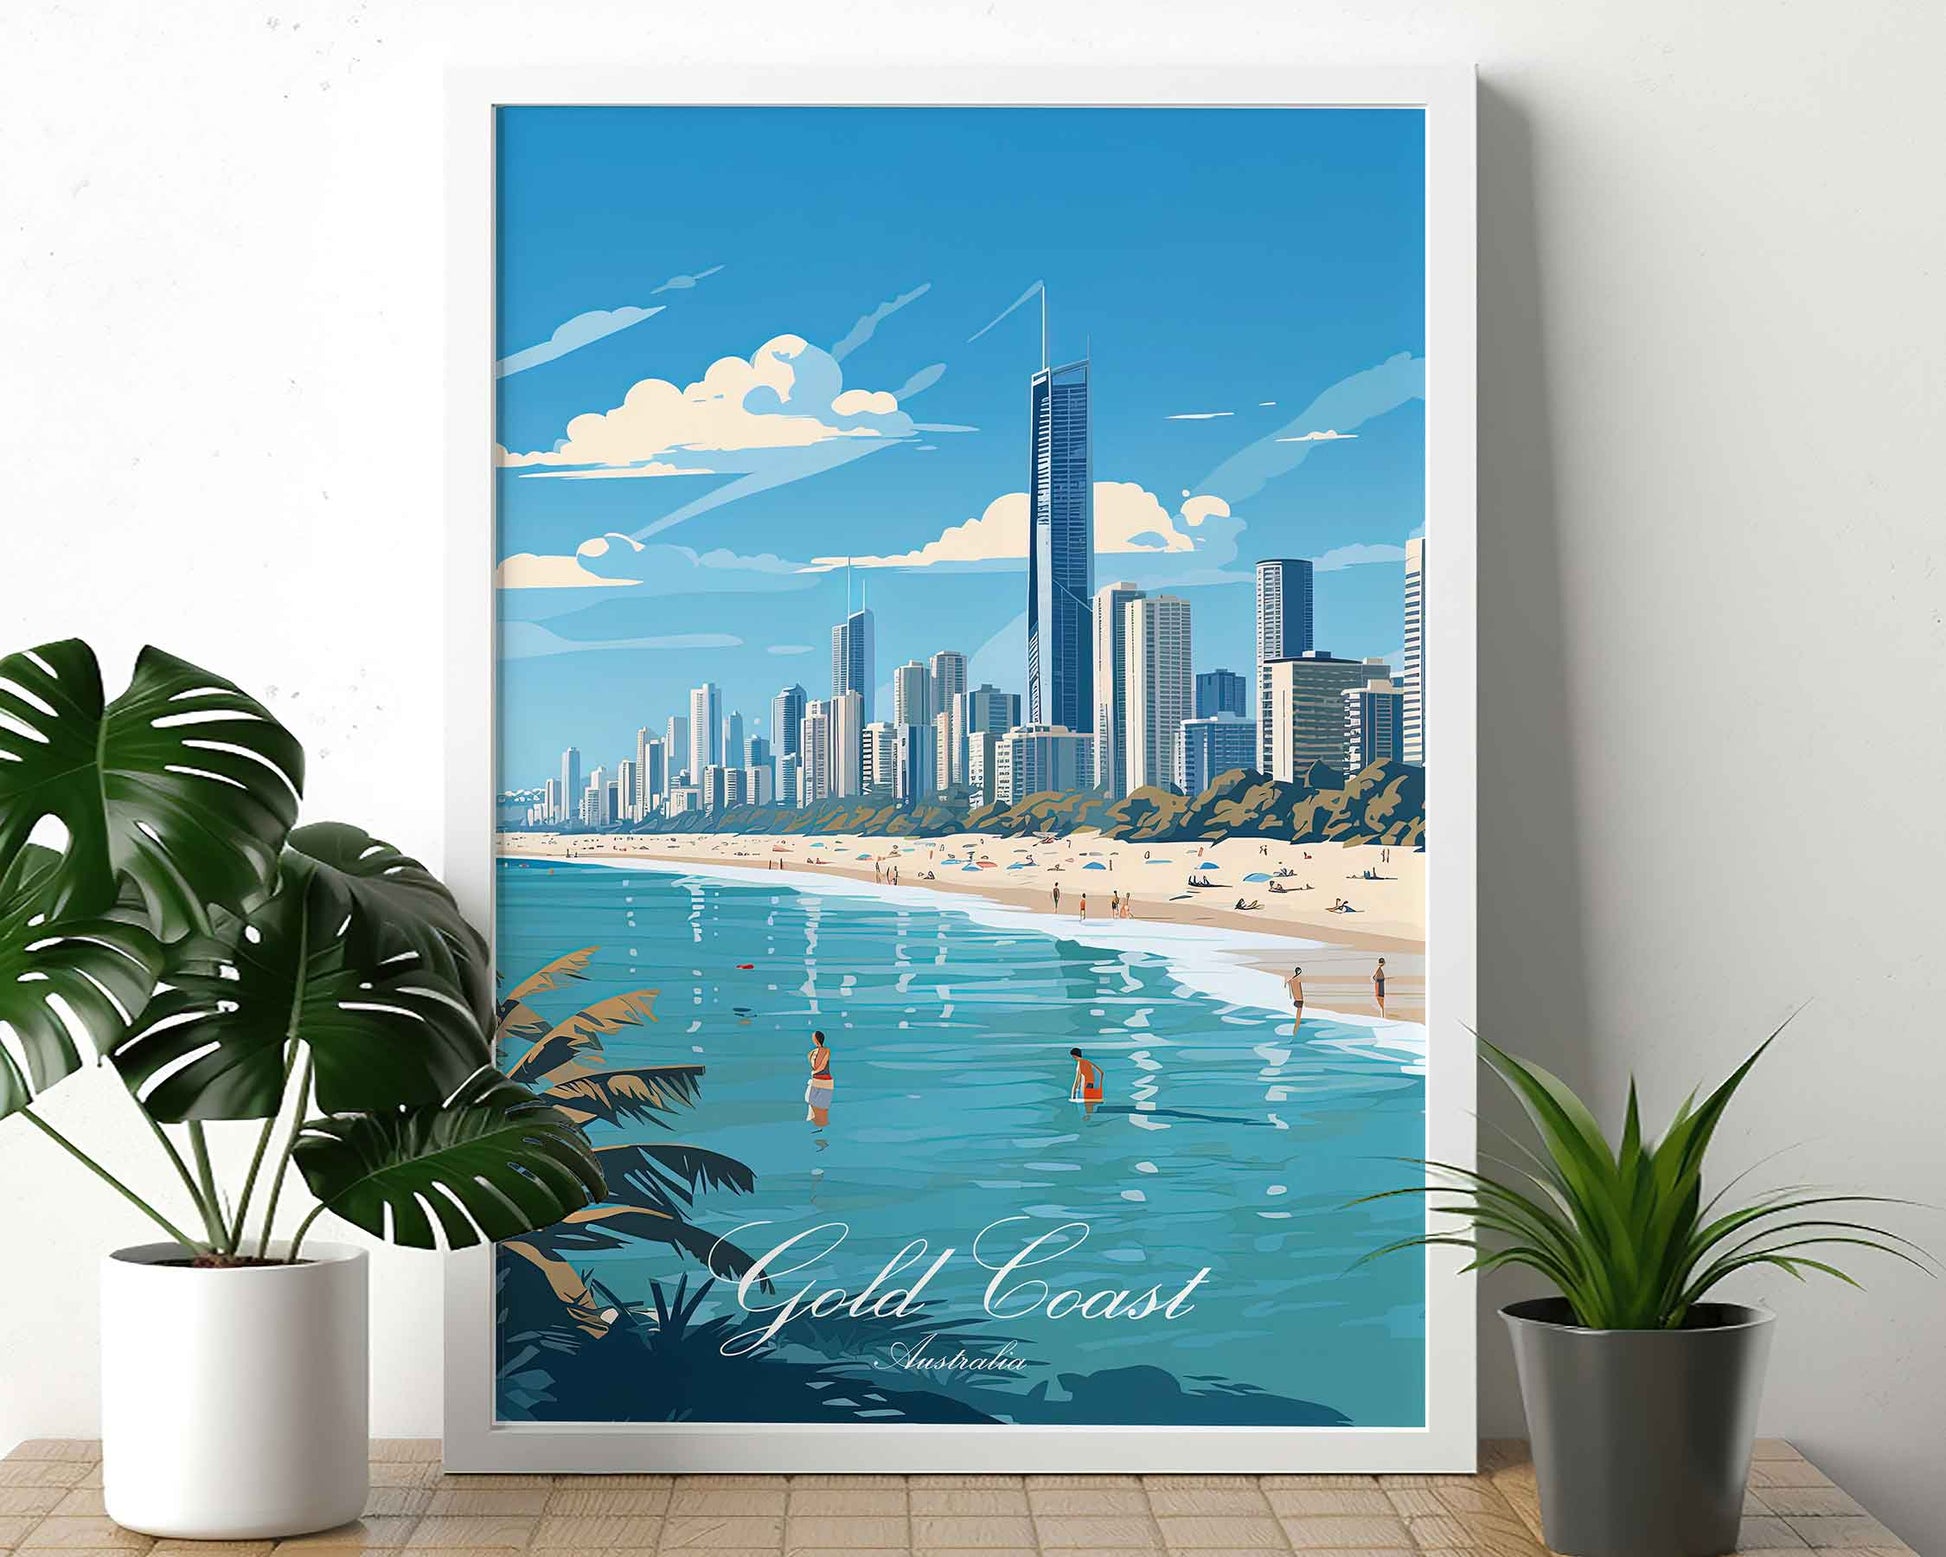 Framed Image of Gold Coast Australia Wall Art Travel Print Posters Illustration